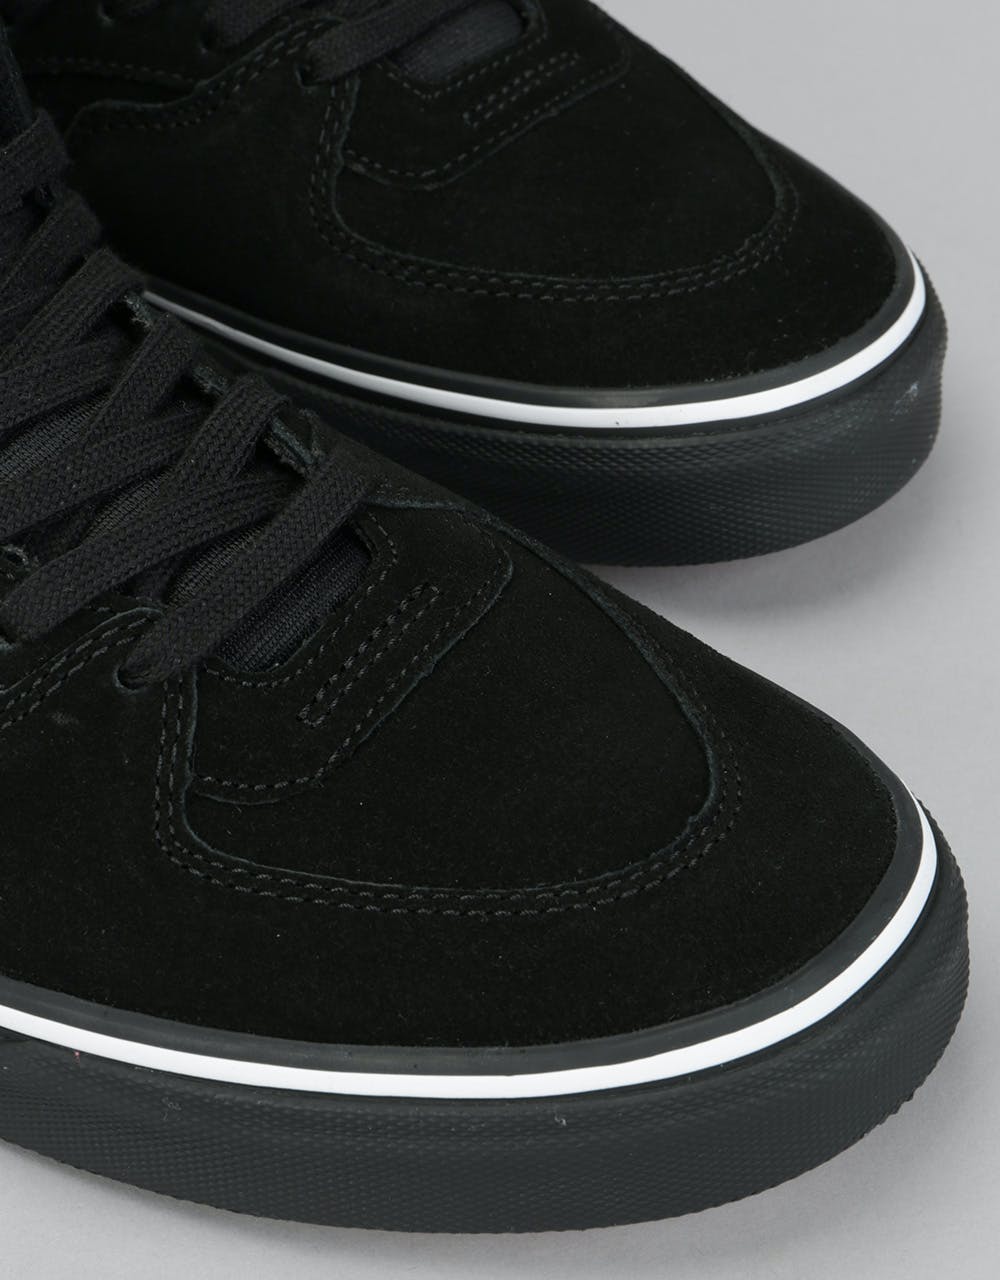 Vans Half Cab Skate Shoes - (Suede) Black/White/Black